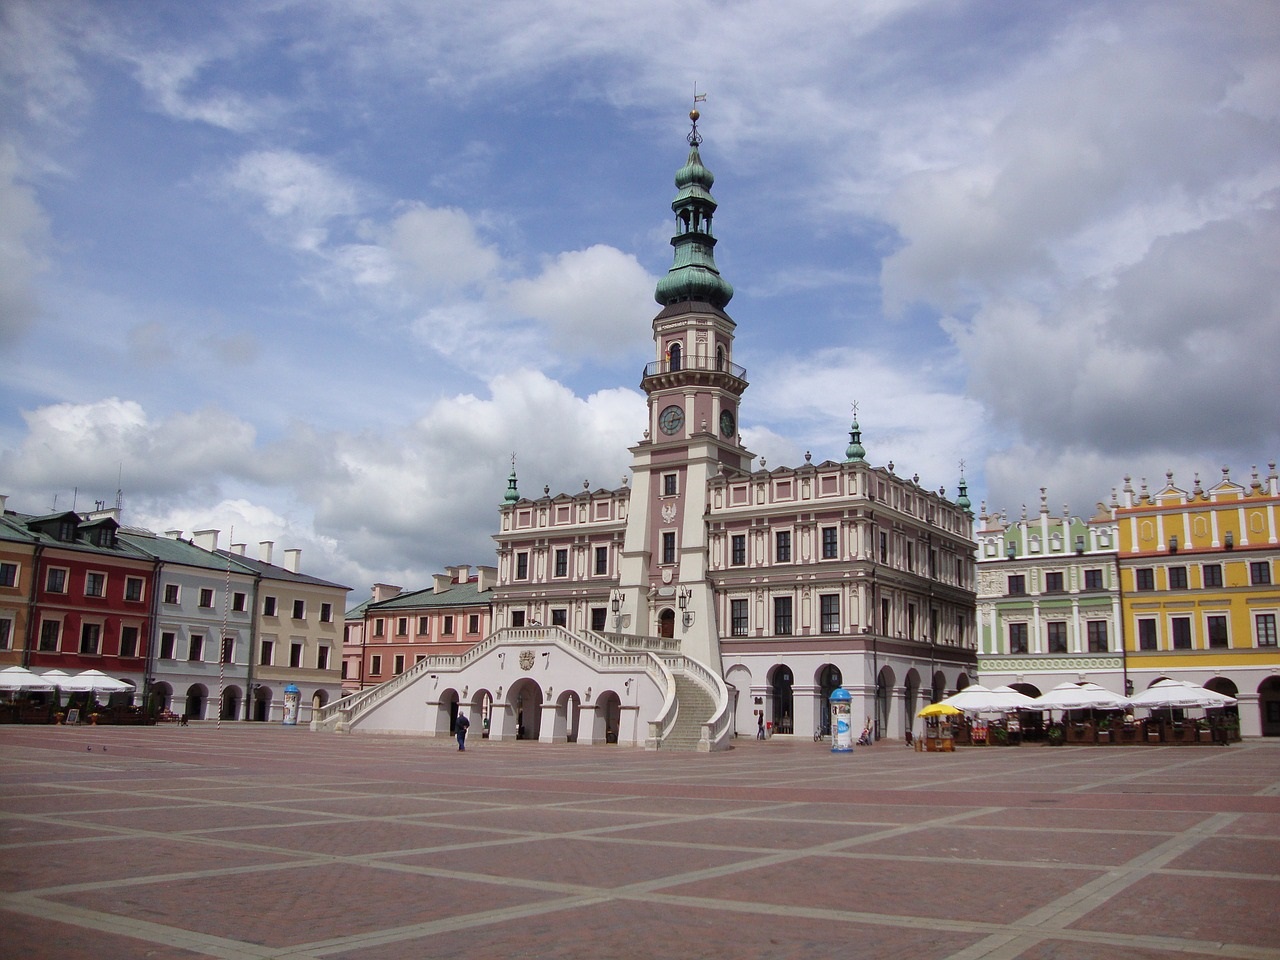 Zamość, Poland (Public Domain)